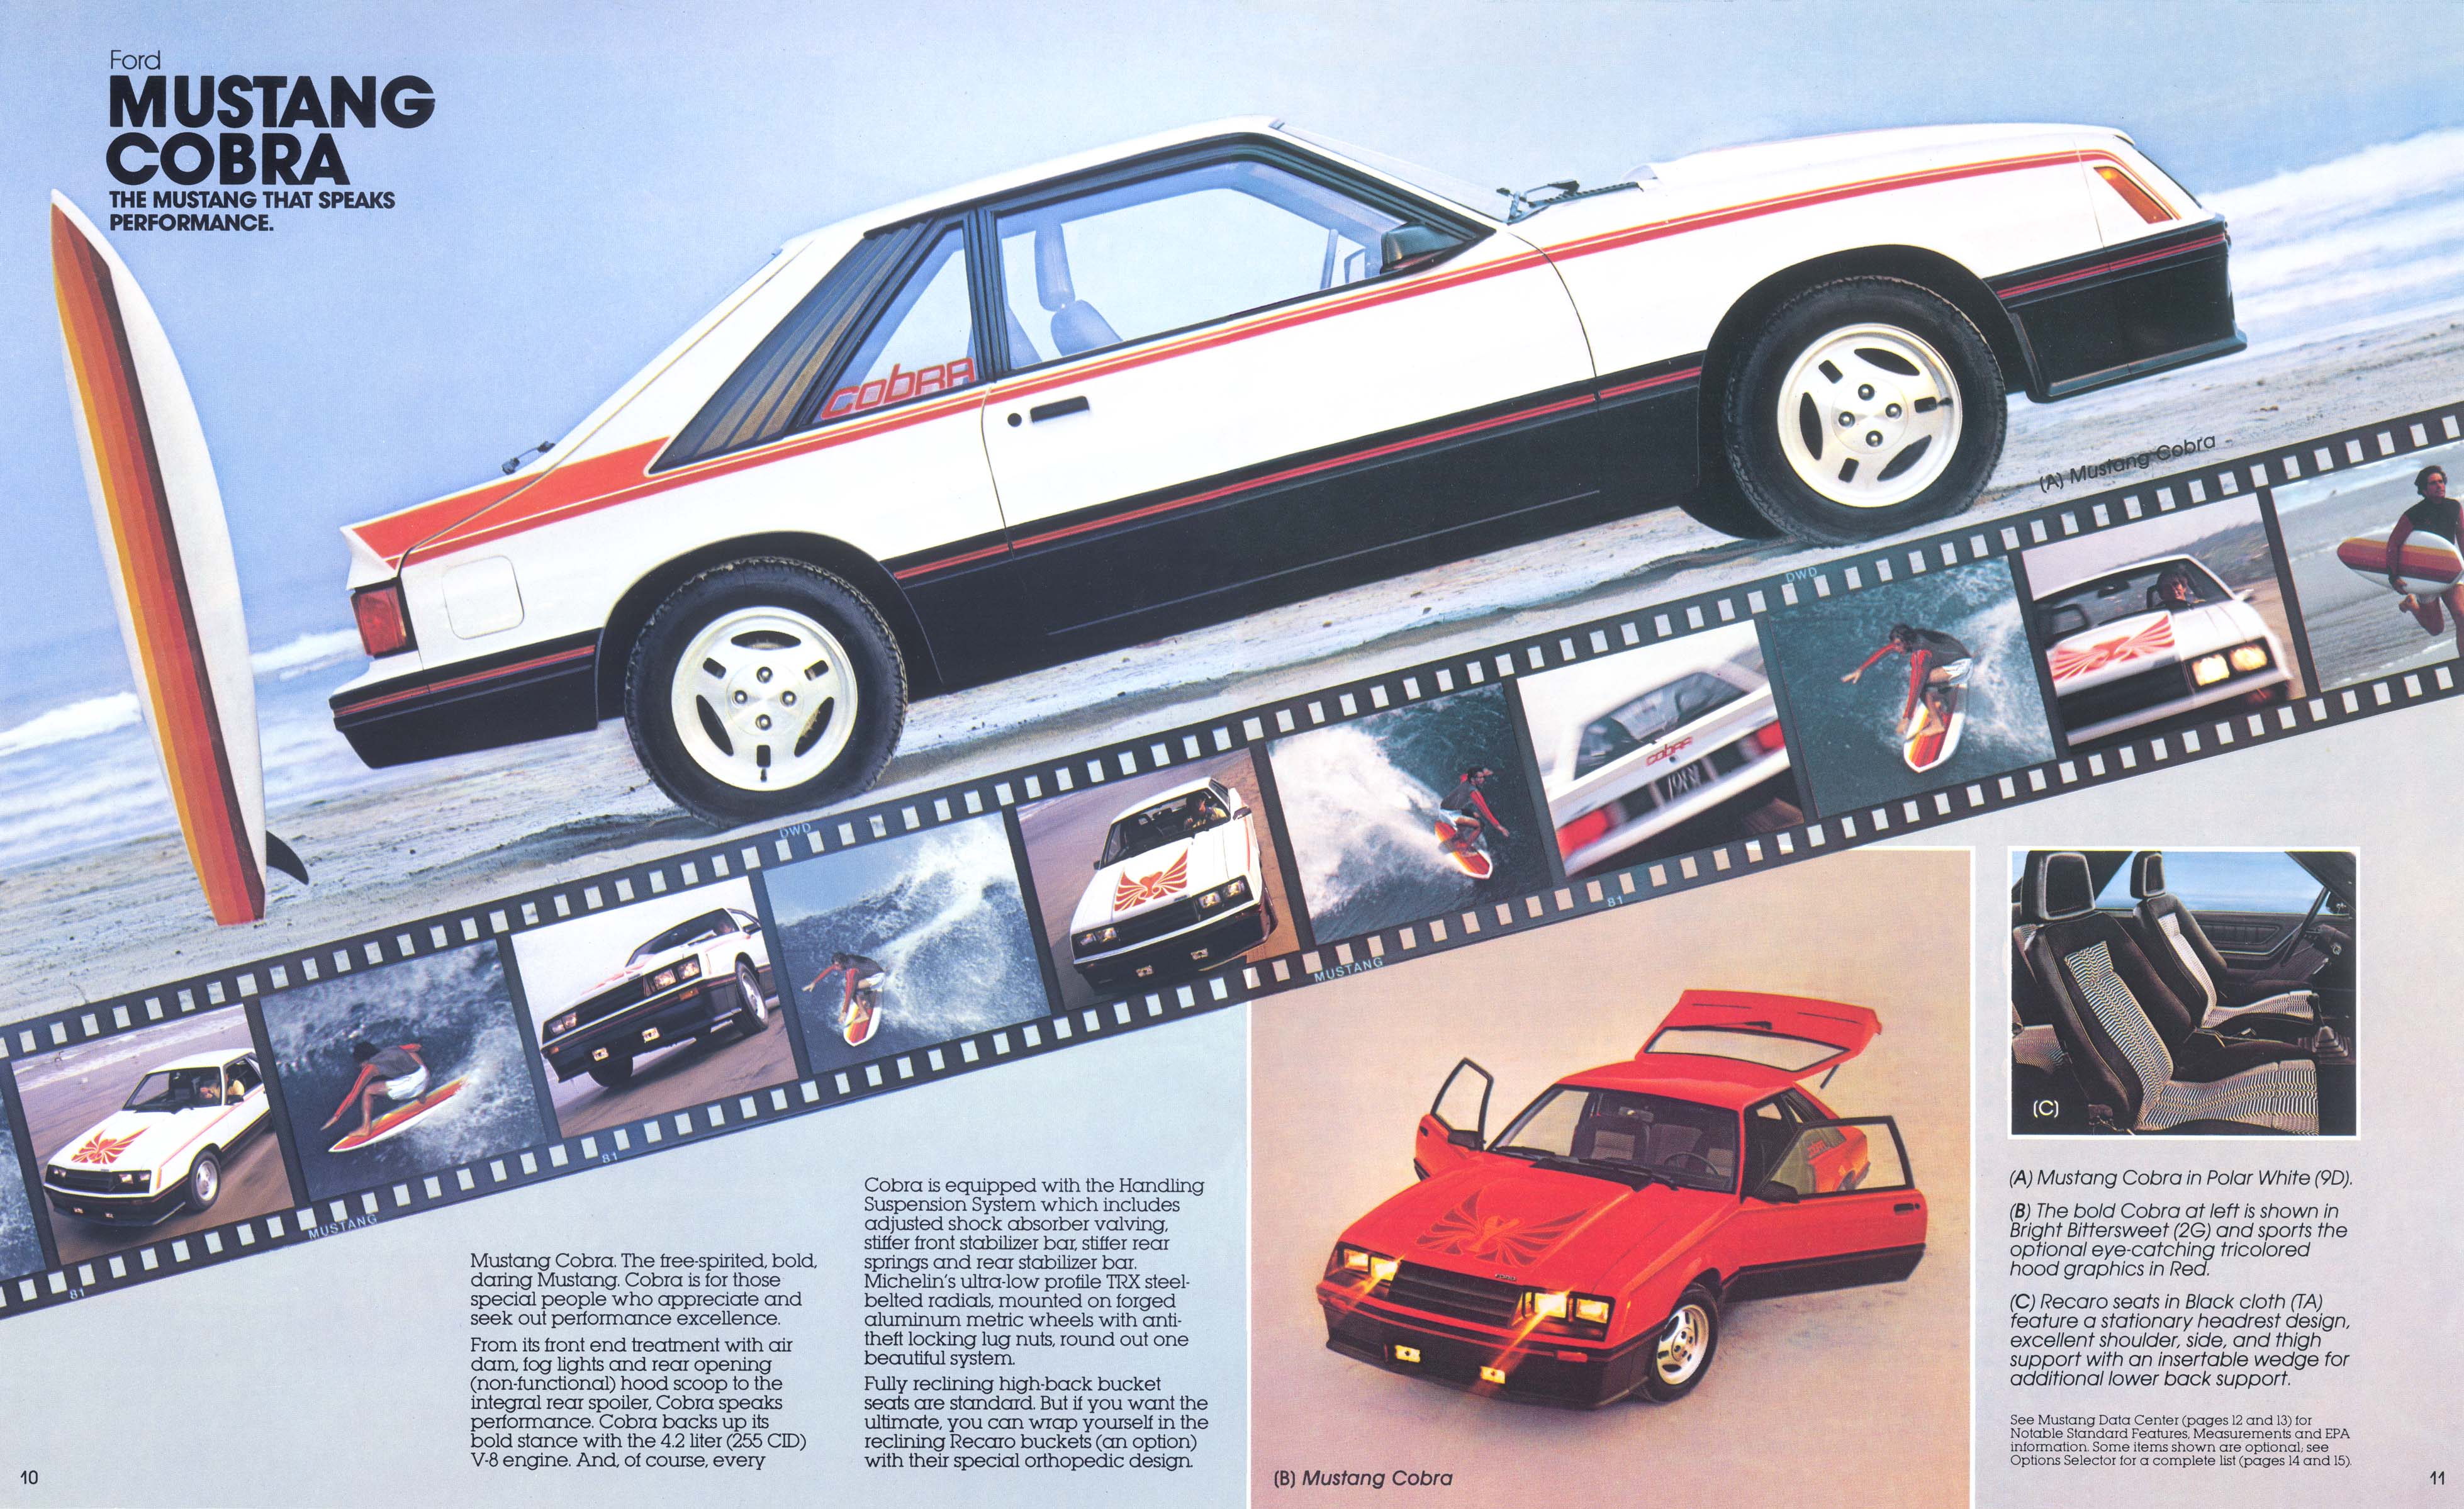 1981_Ford_Mustang_Rev1-10-11